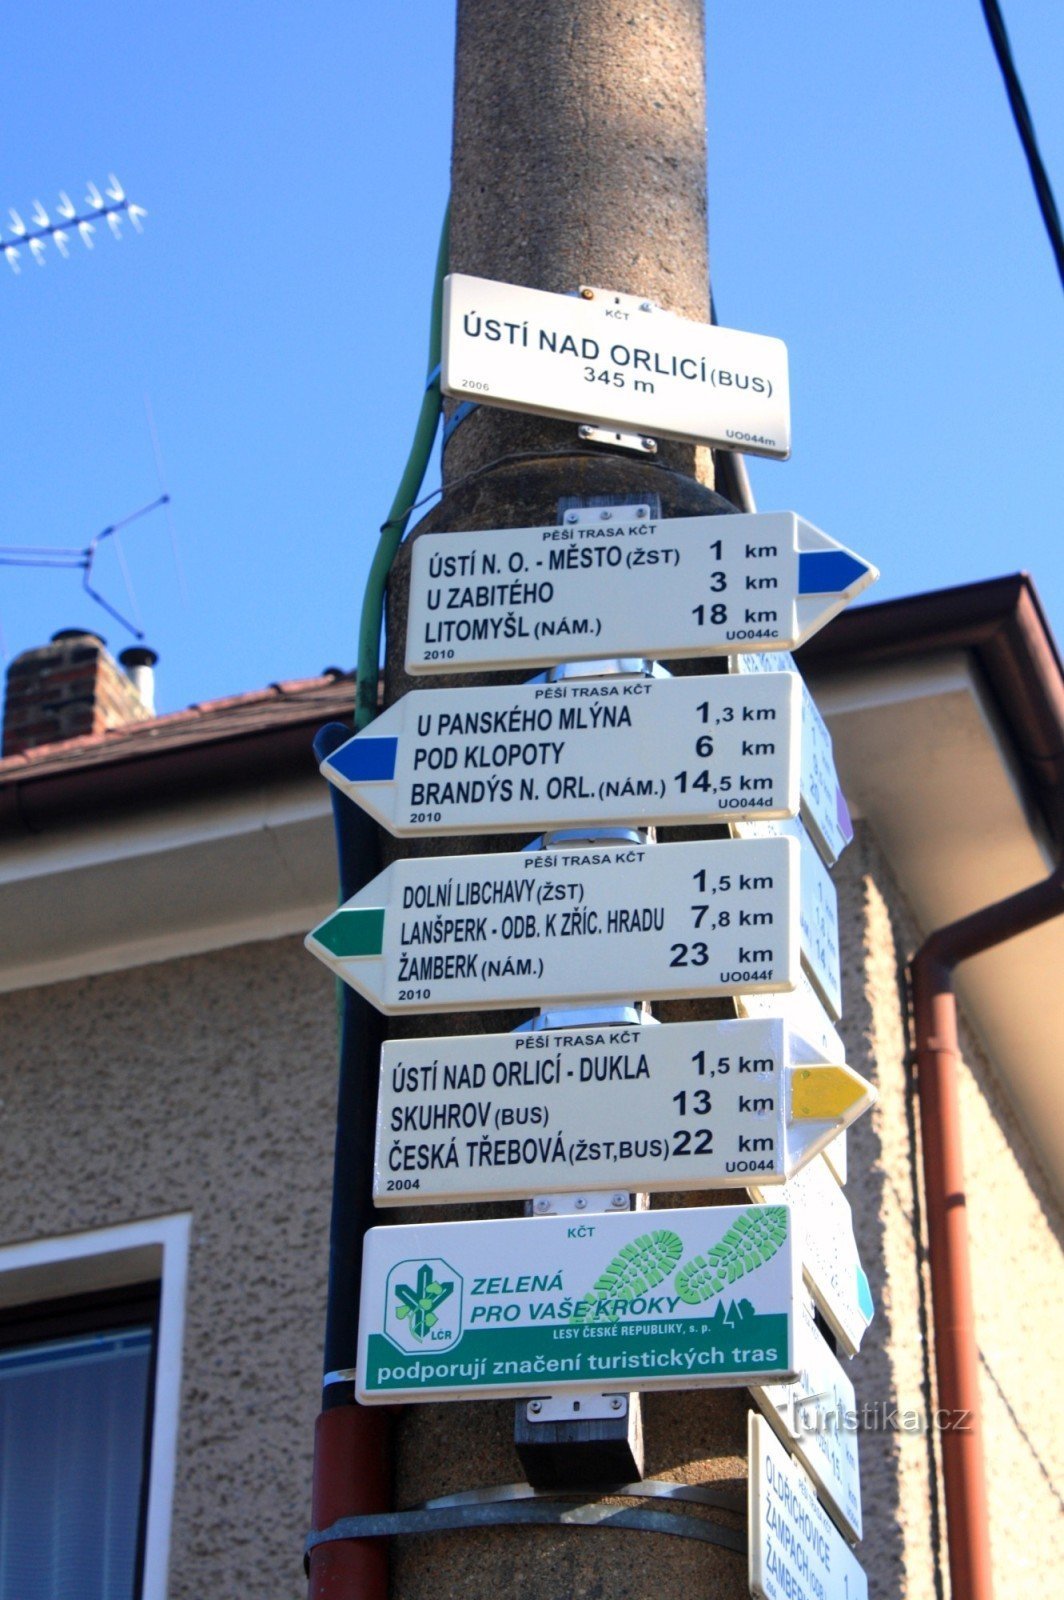 Ústí nad Orlicí - η κύρια τουριστική πινακίδα